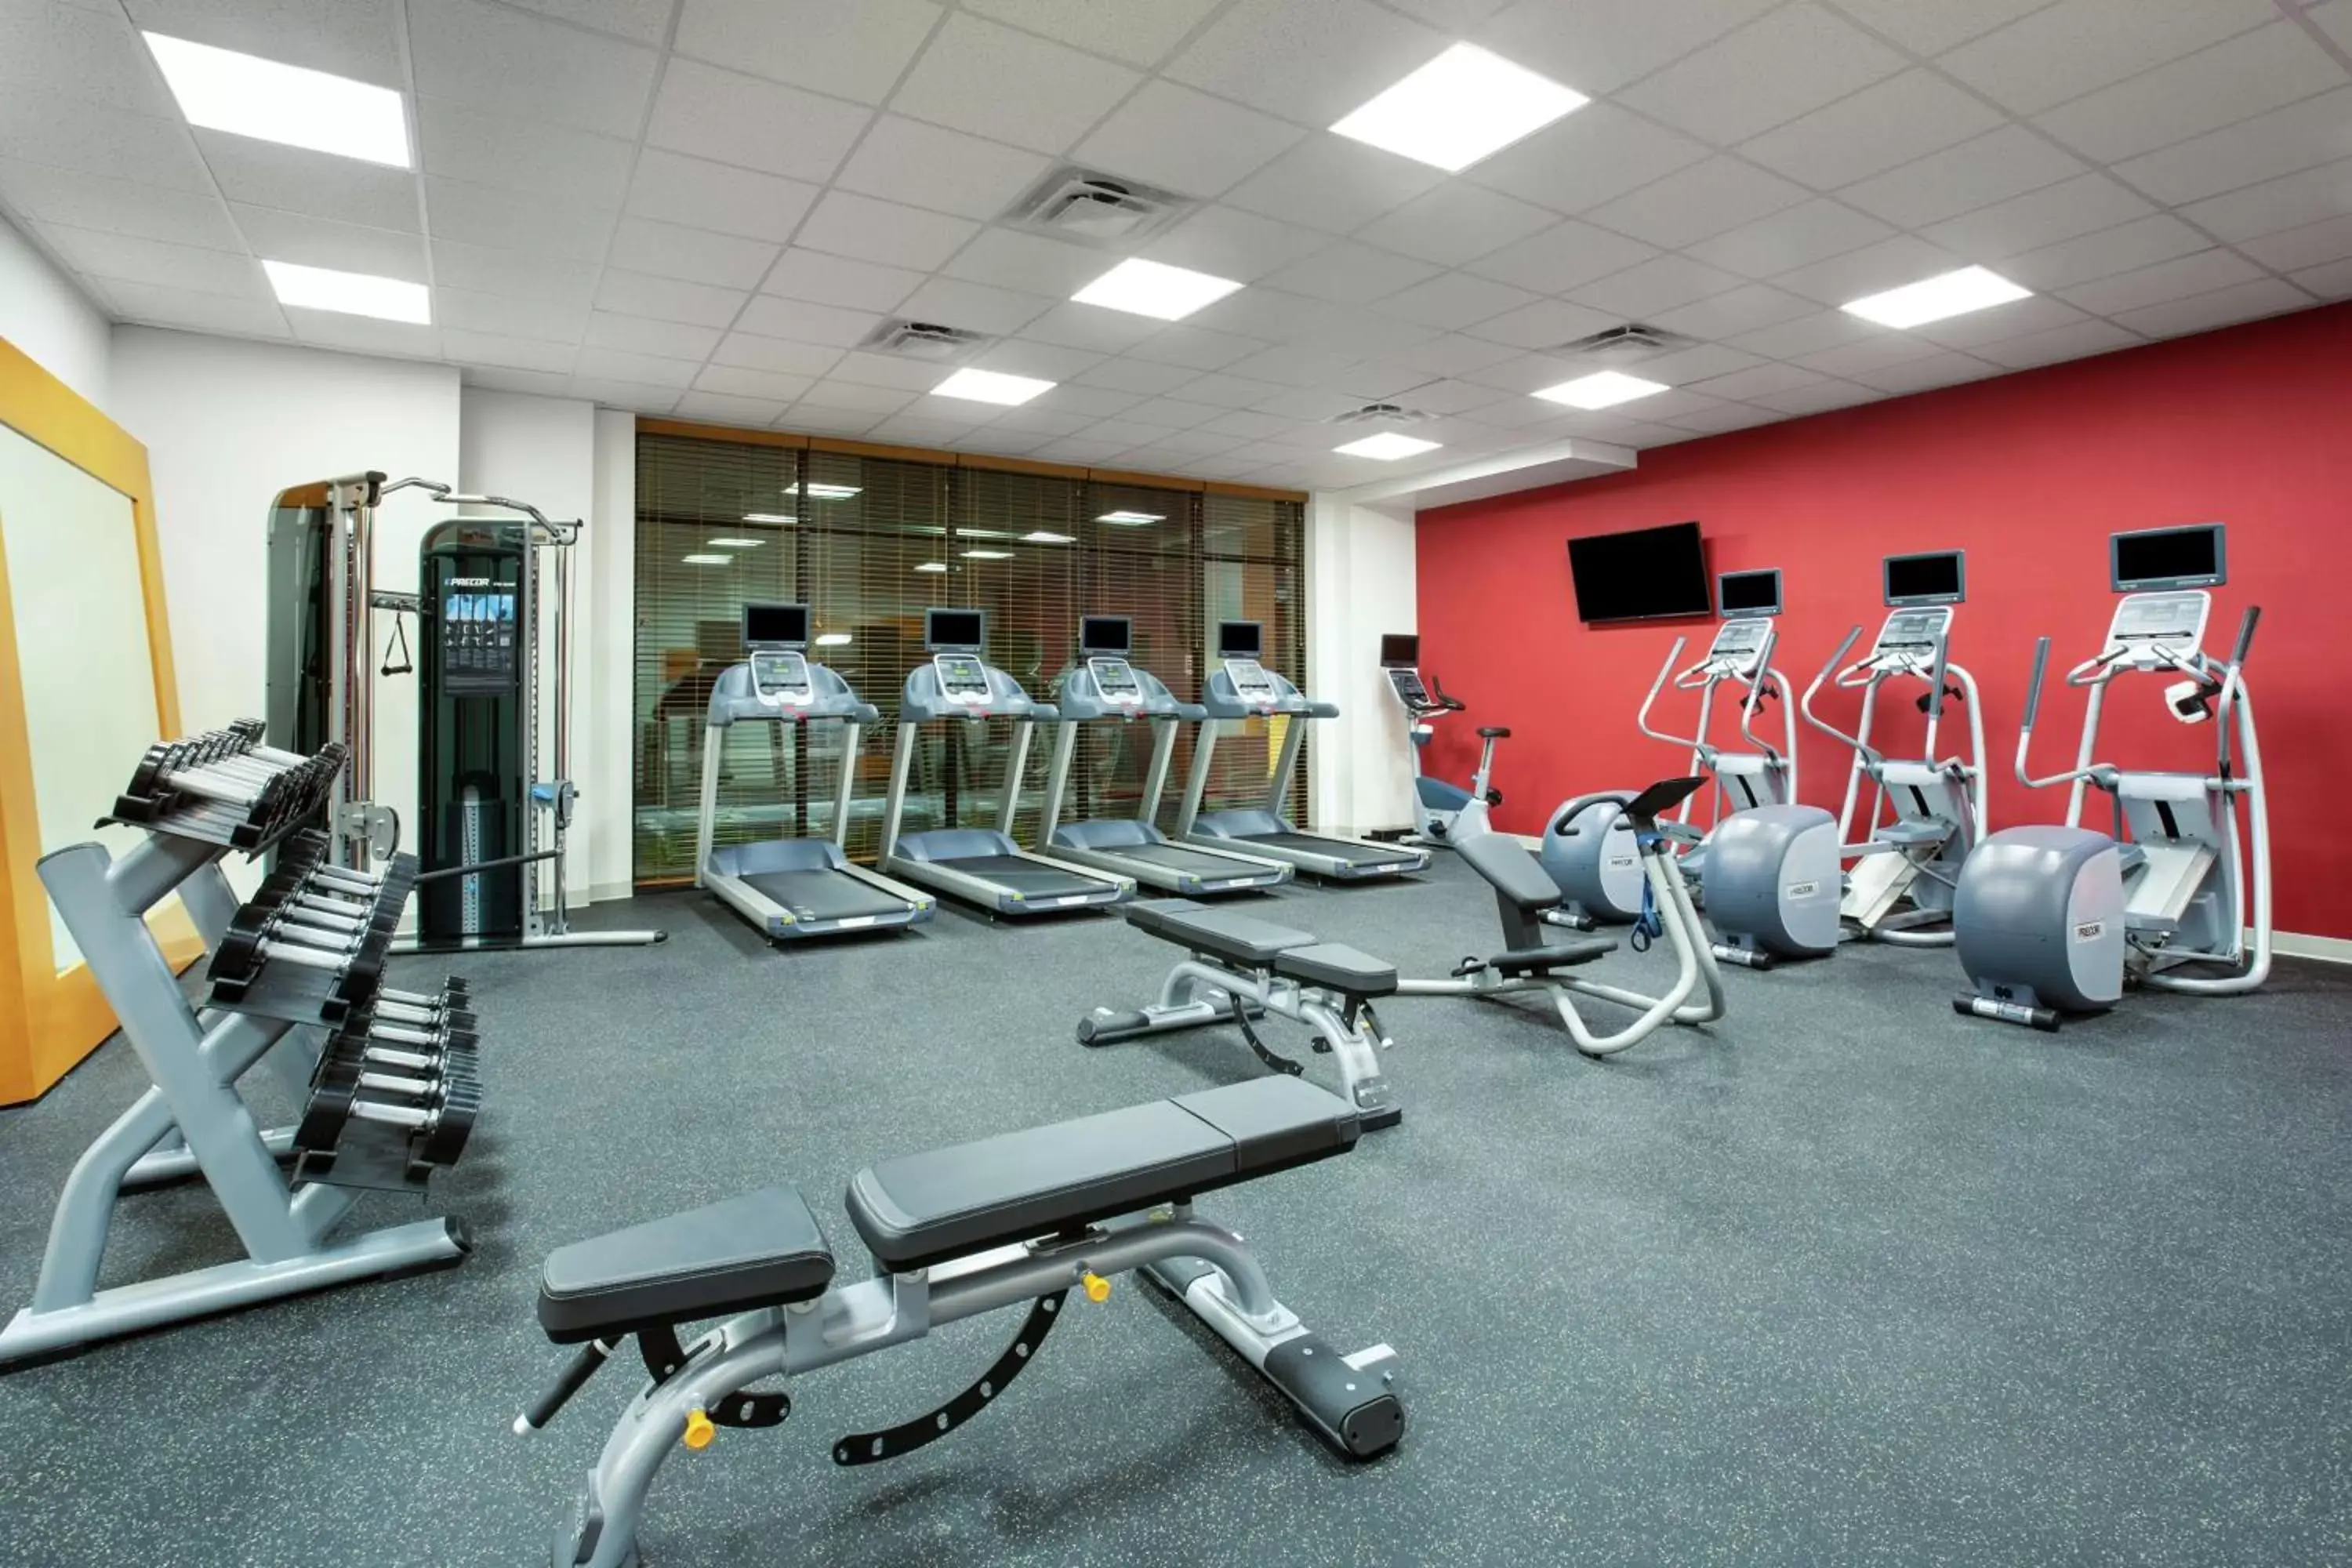 Fitness centre/facilities, Fitness Center/Facilities in Hilton Garden Inn Las Vegas City Center